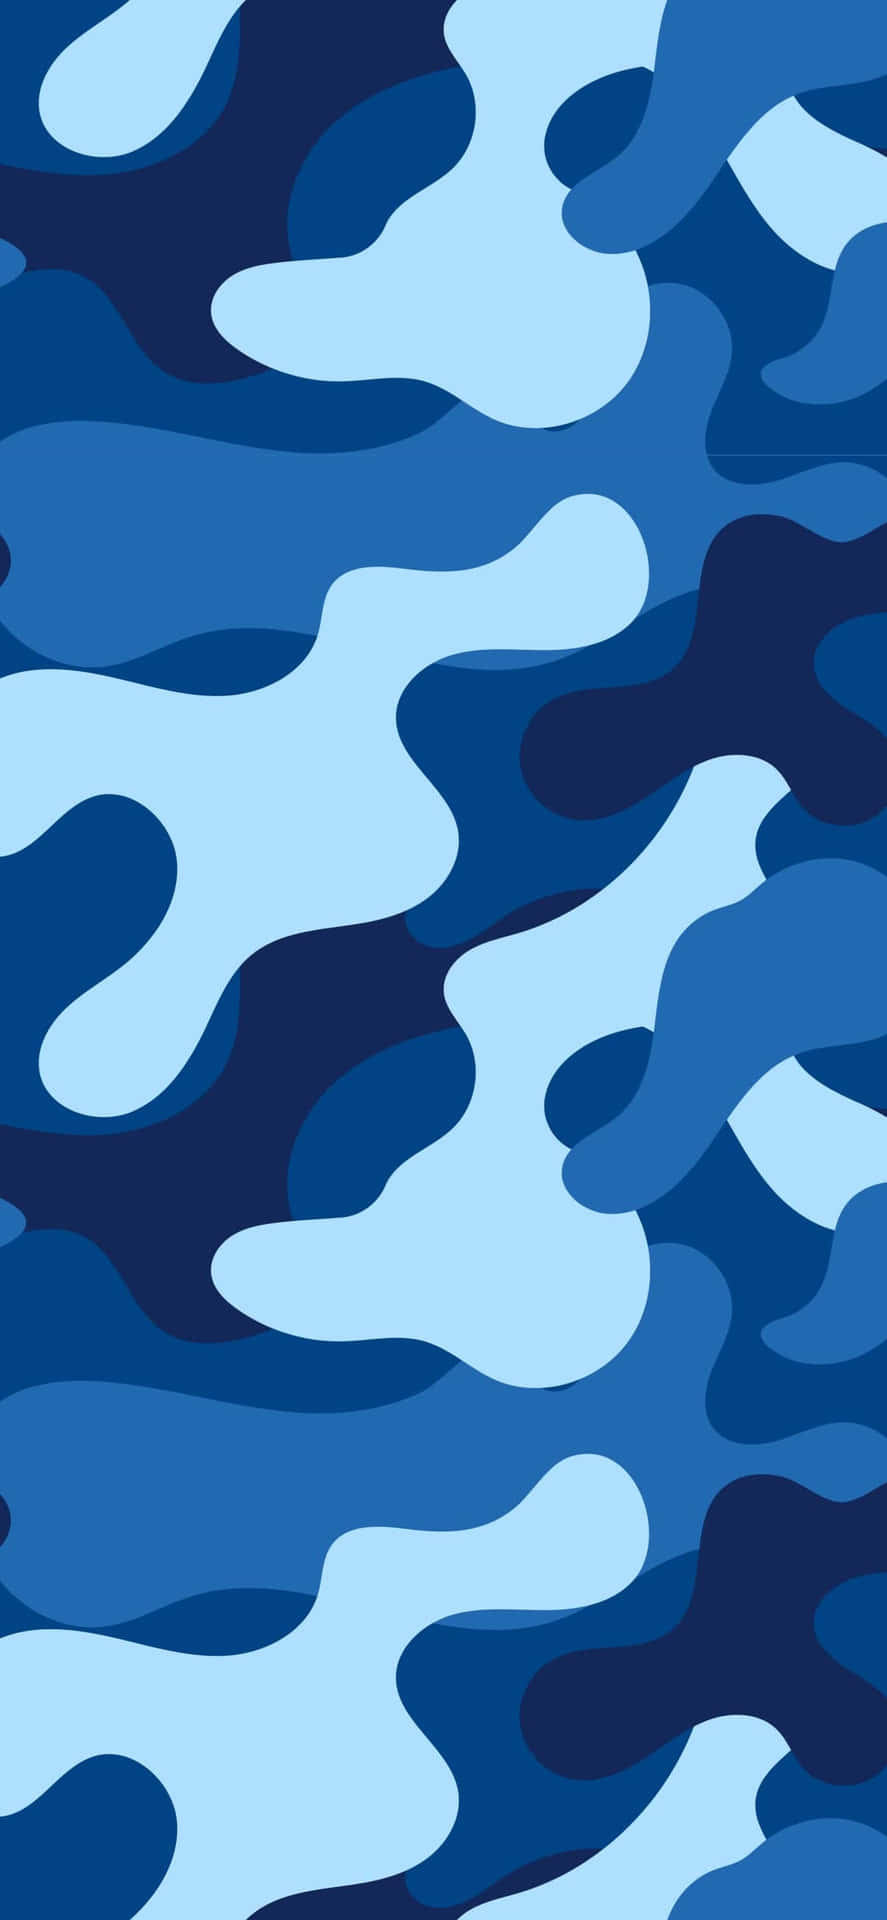 Føl farten i blåt camouflage. Wallpaper